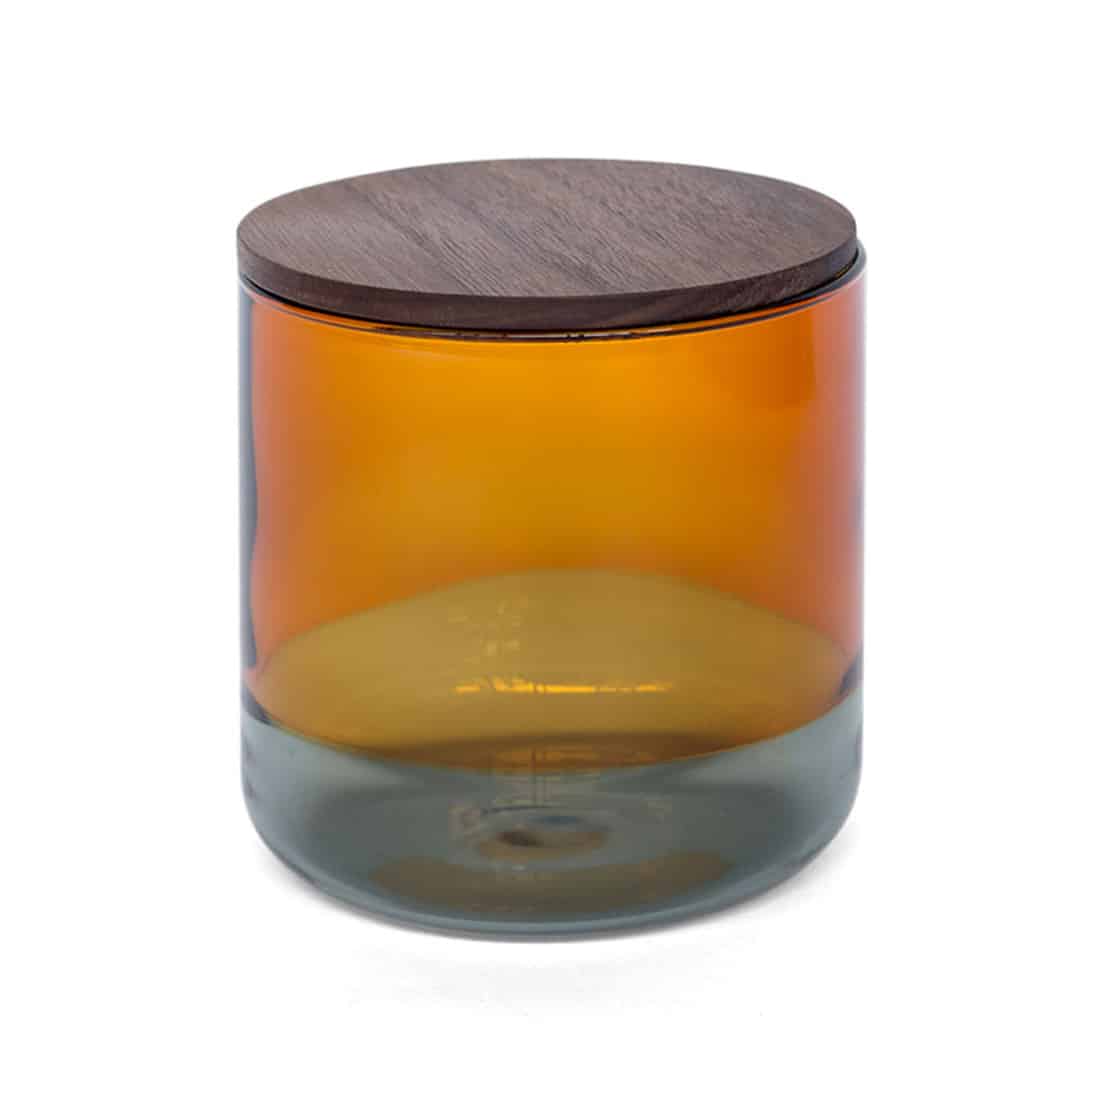 Glasbehälter Dose Holz Orange Grau Design